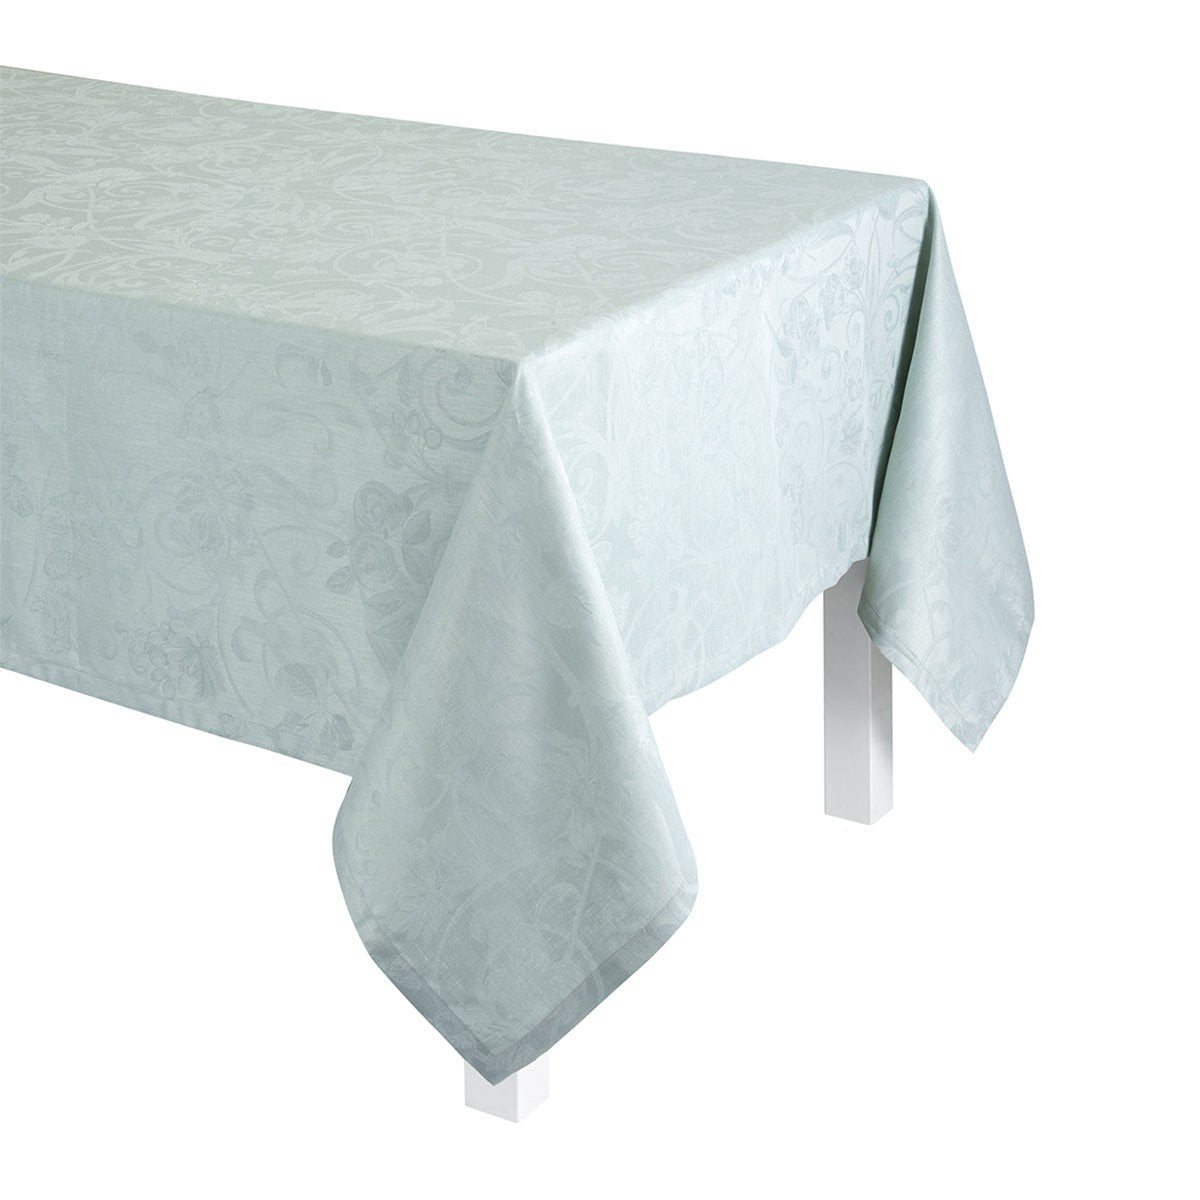 Le Jacquard Français Table Linen Tivoli in Mist Fig Linens Tablecloth